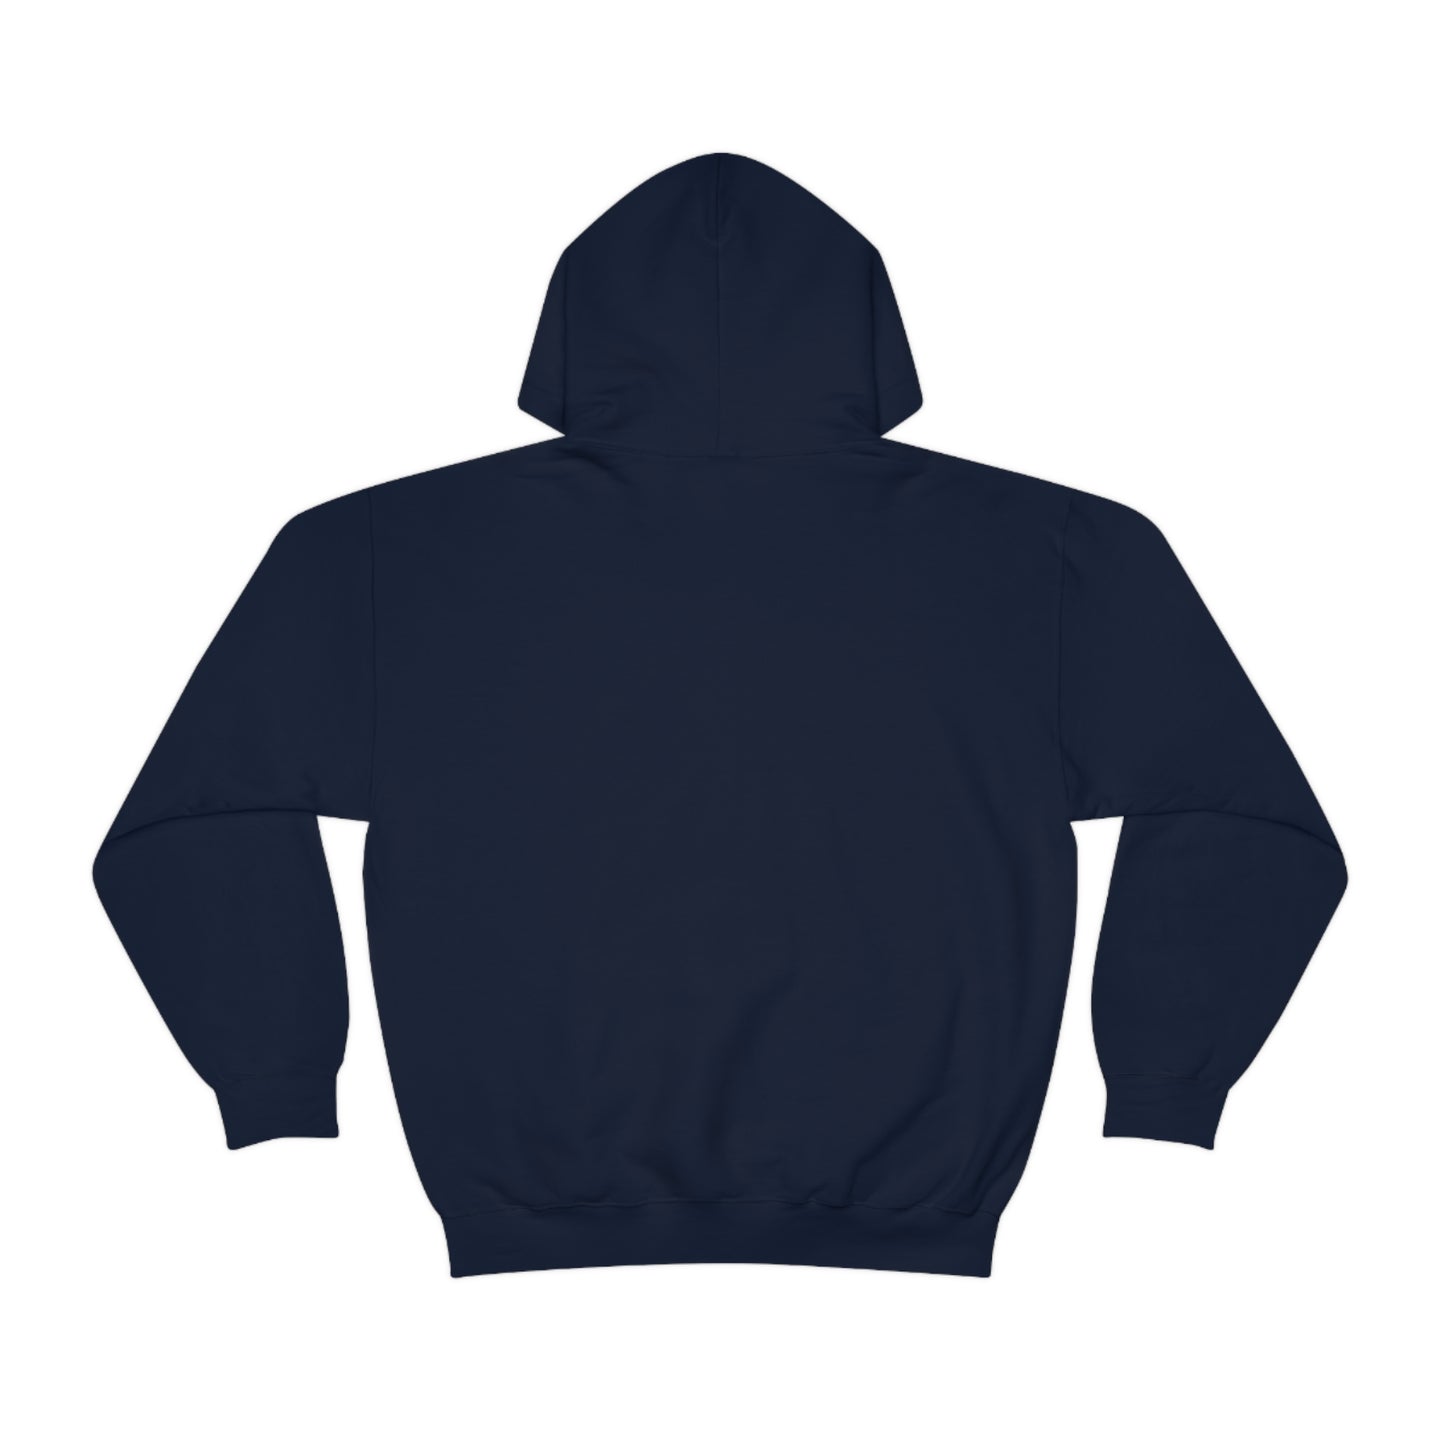 Copy of Blue Zone - Hooded Sweatshirt